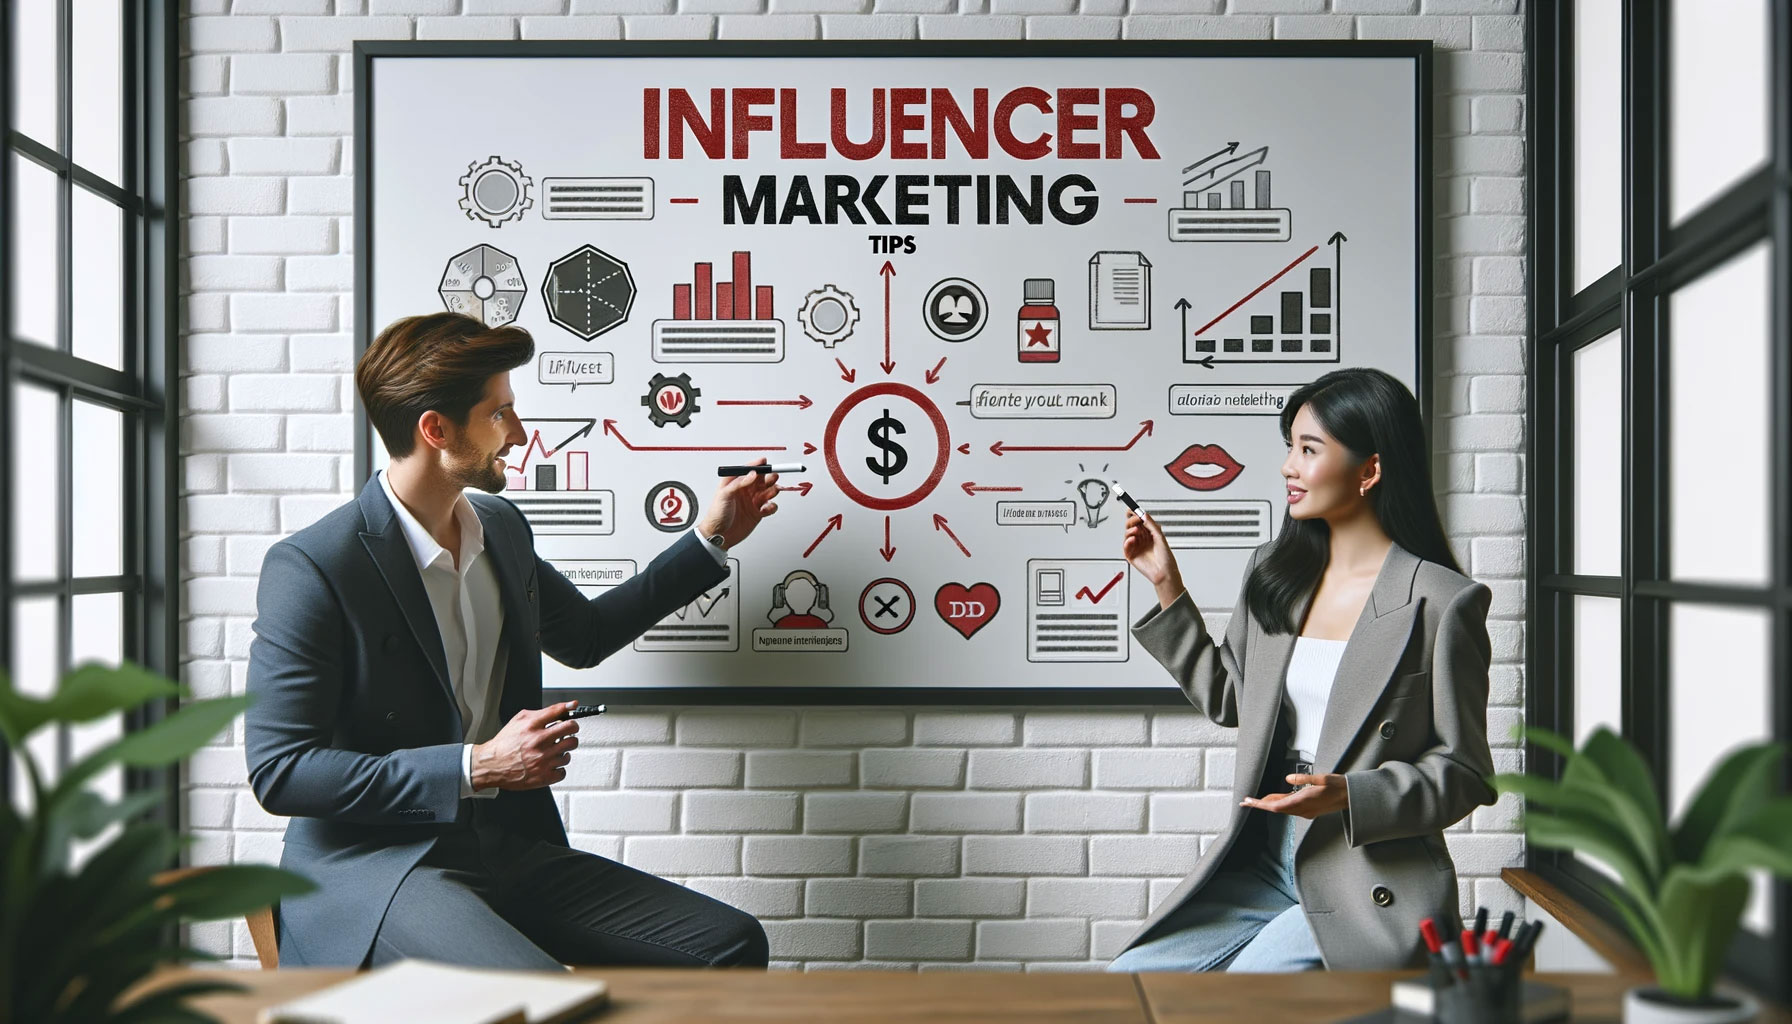 Influencer Marketing Tips
